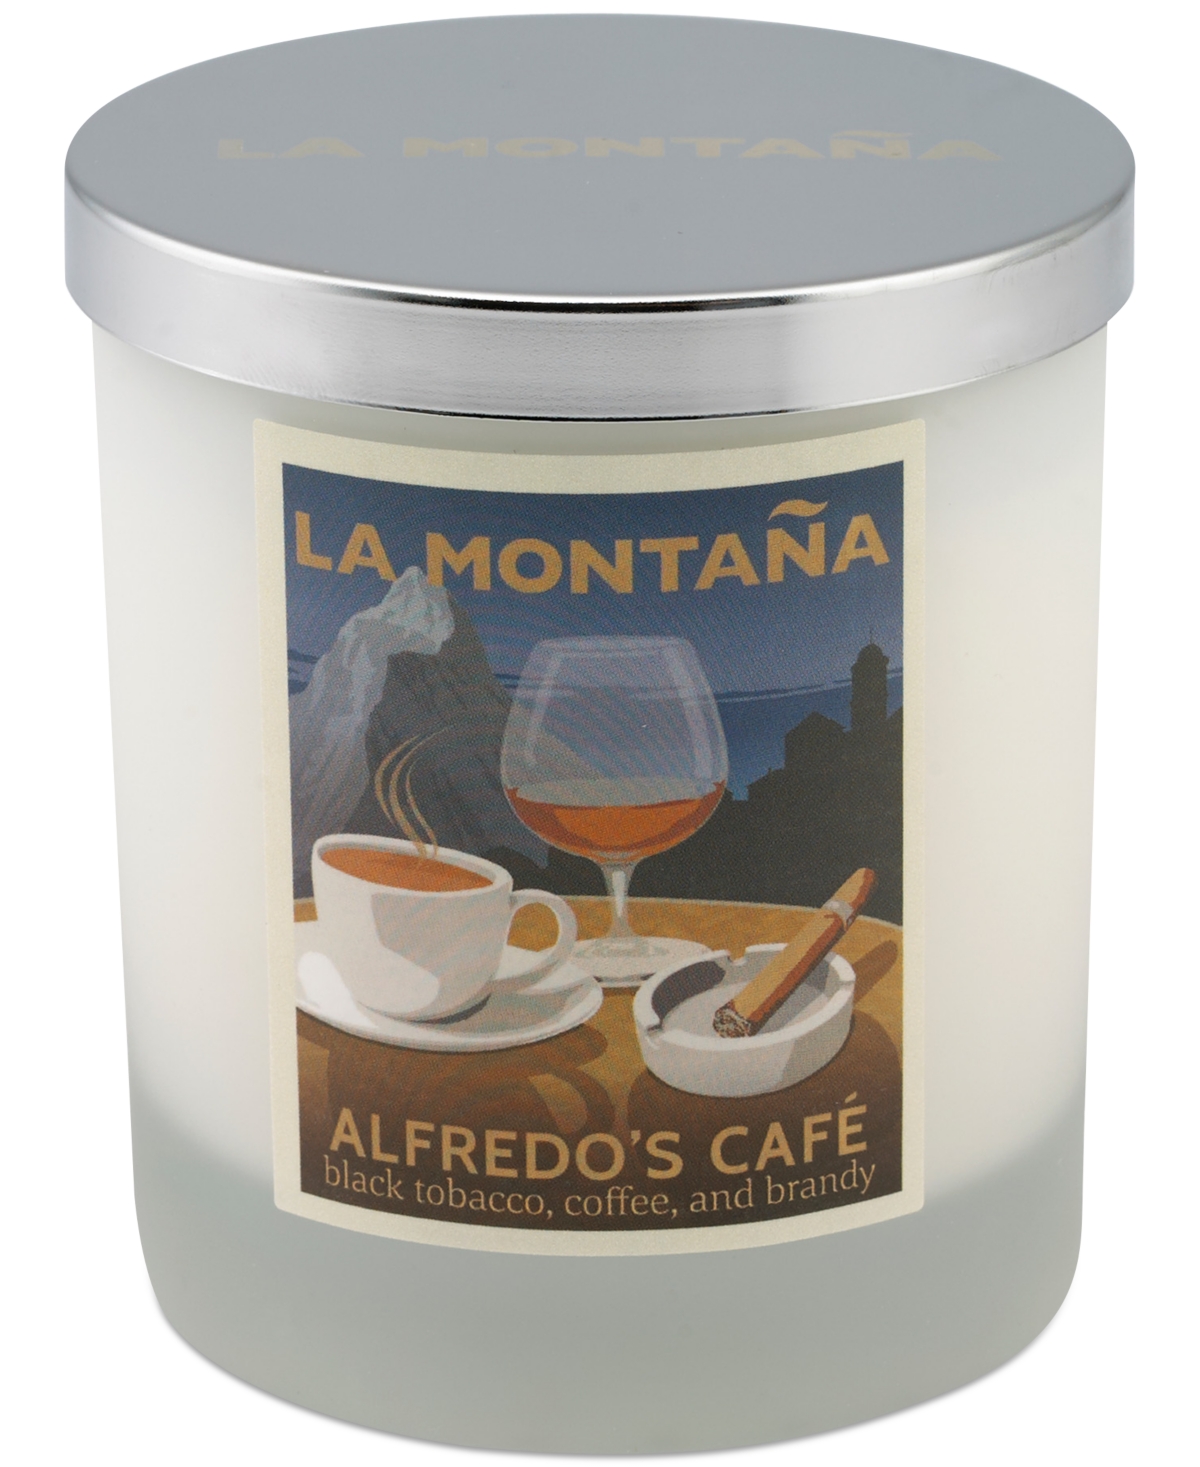 La Montana Alfredos Cafe Scented Candle, 8 oz.